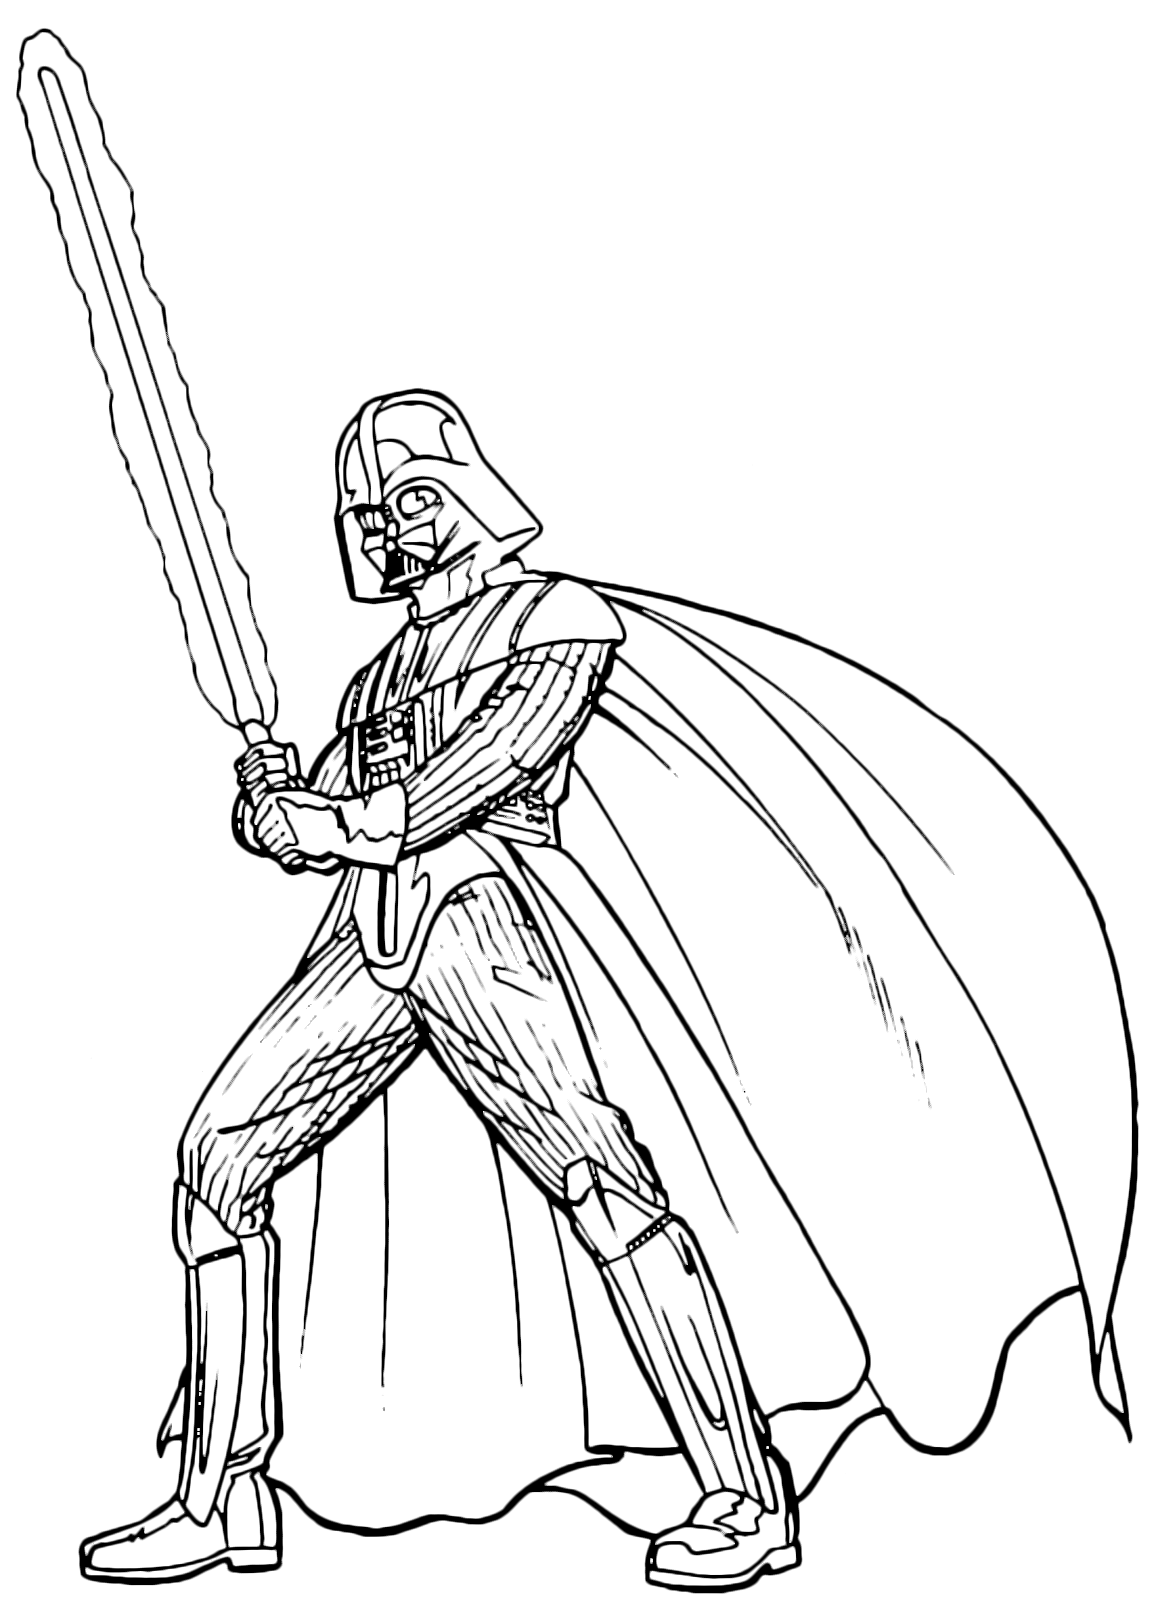 Star Wars - Dart Fener pronto al combattimento con la sua spada laser